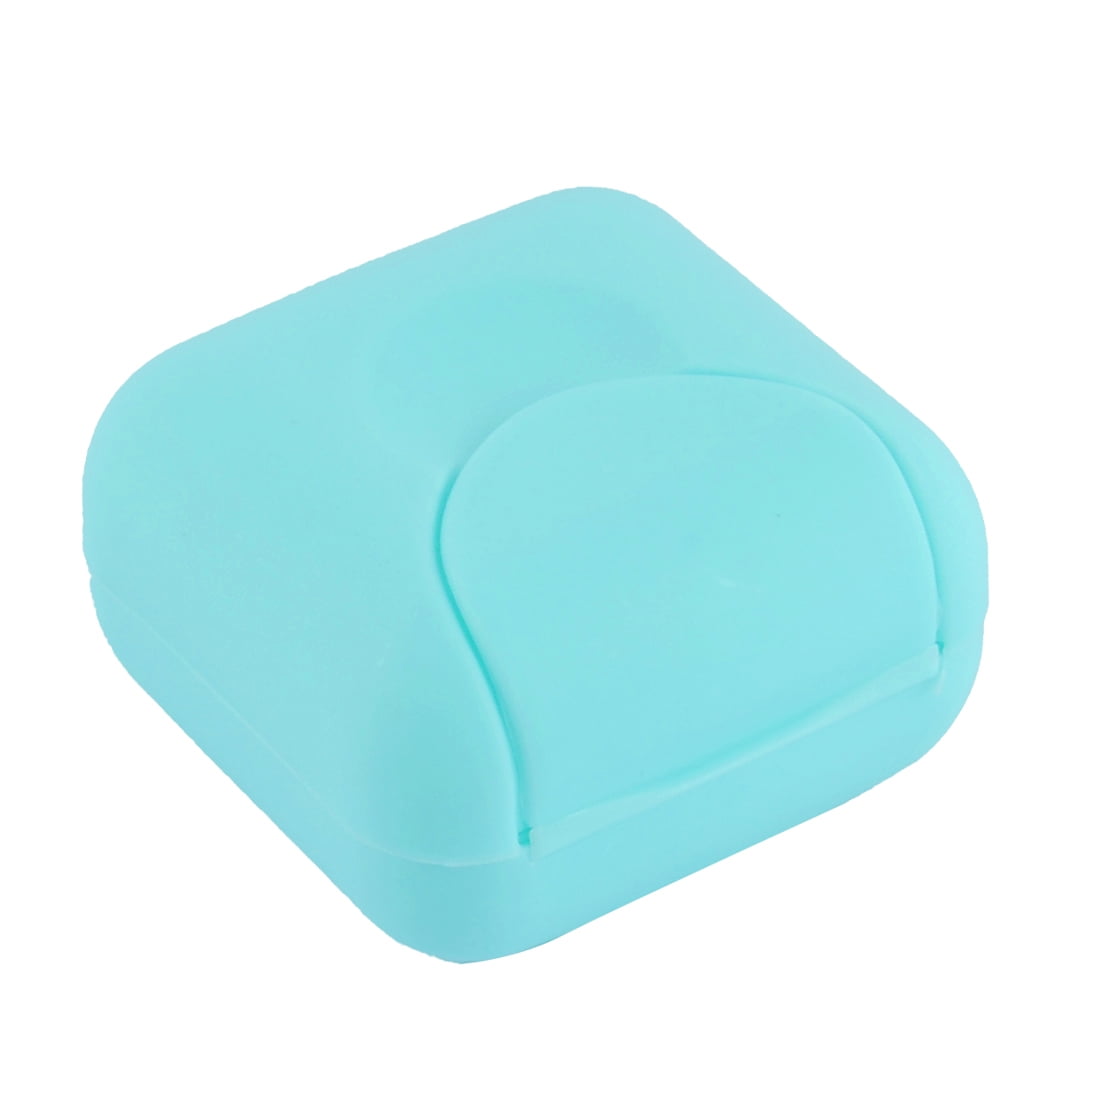 YiGo Plastic Soap Case Box Holder Dish Container Black polypropylene